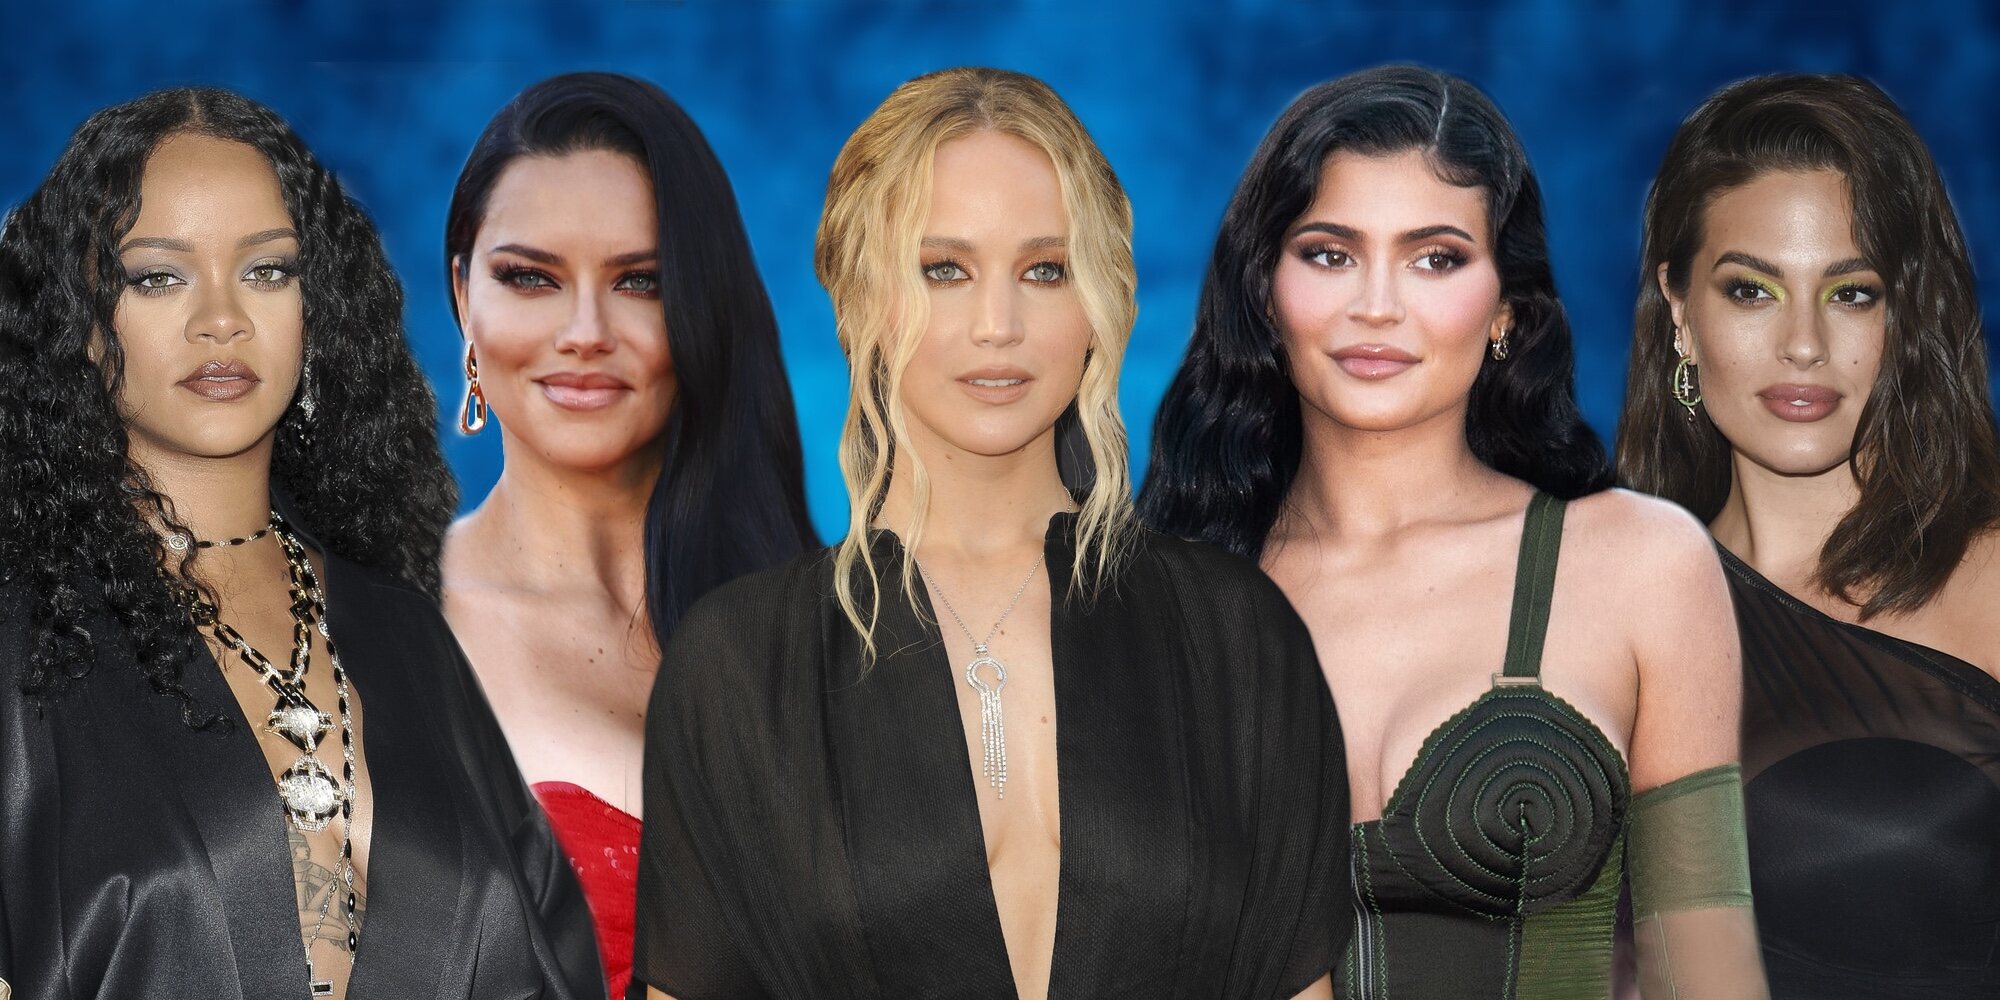 Rihanna, Jennifer Lawrence o Kylie Jenner entre las celebs internacionales que han sido mamás en 2022